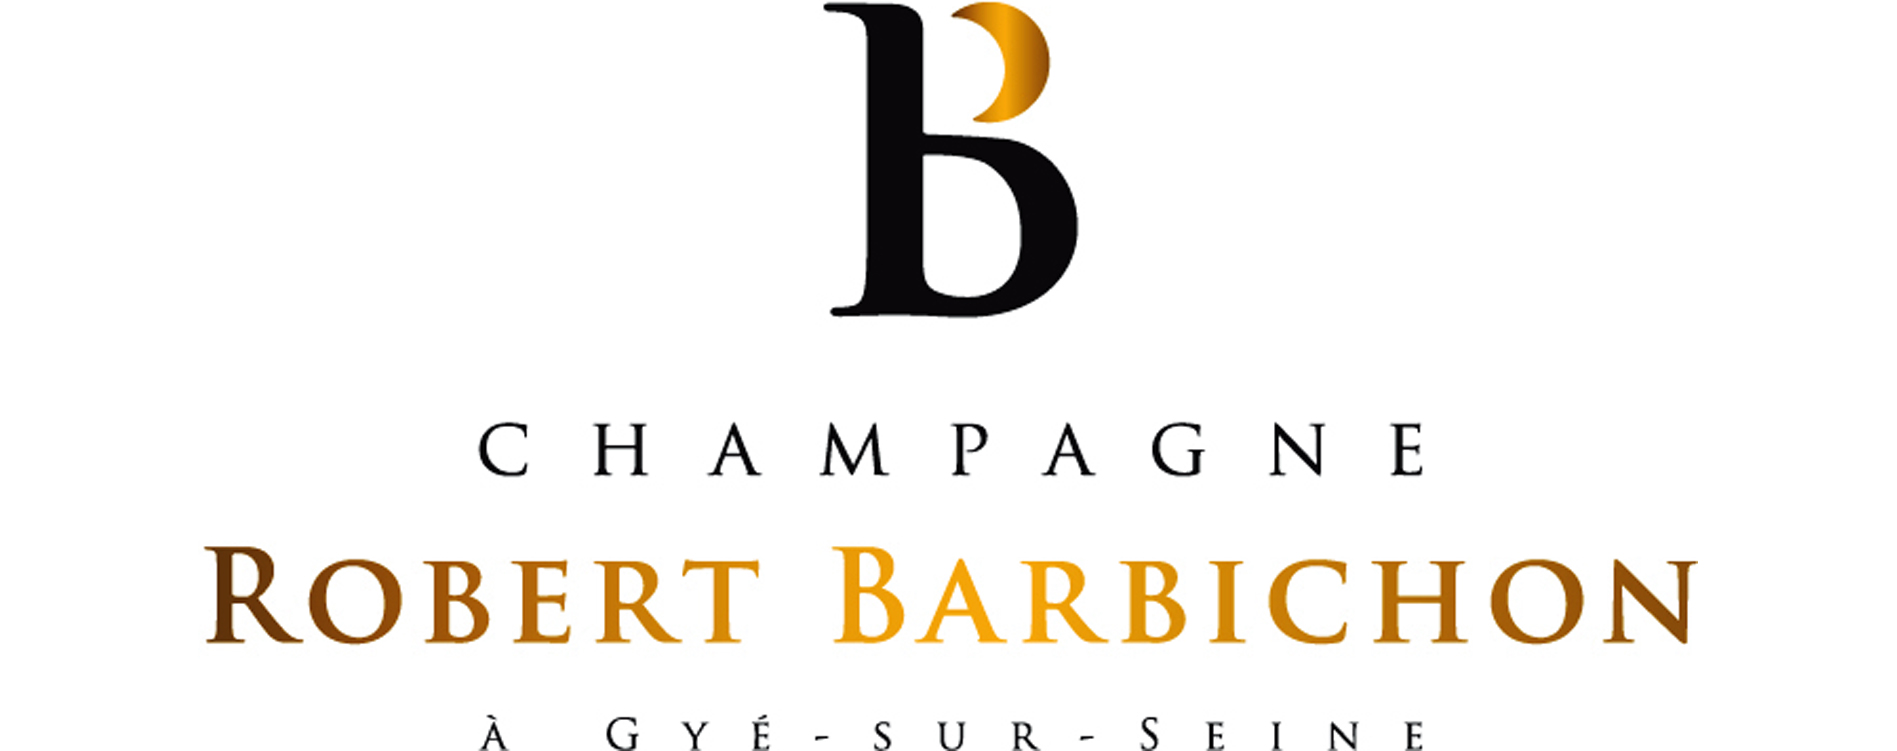 Champagne-Robert-Barbichon logo